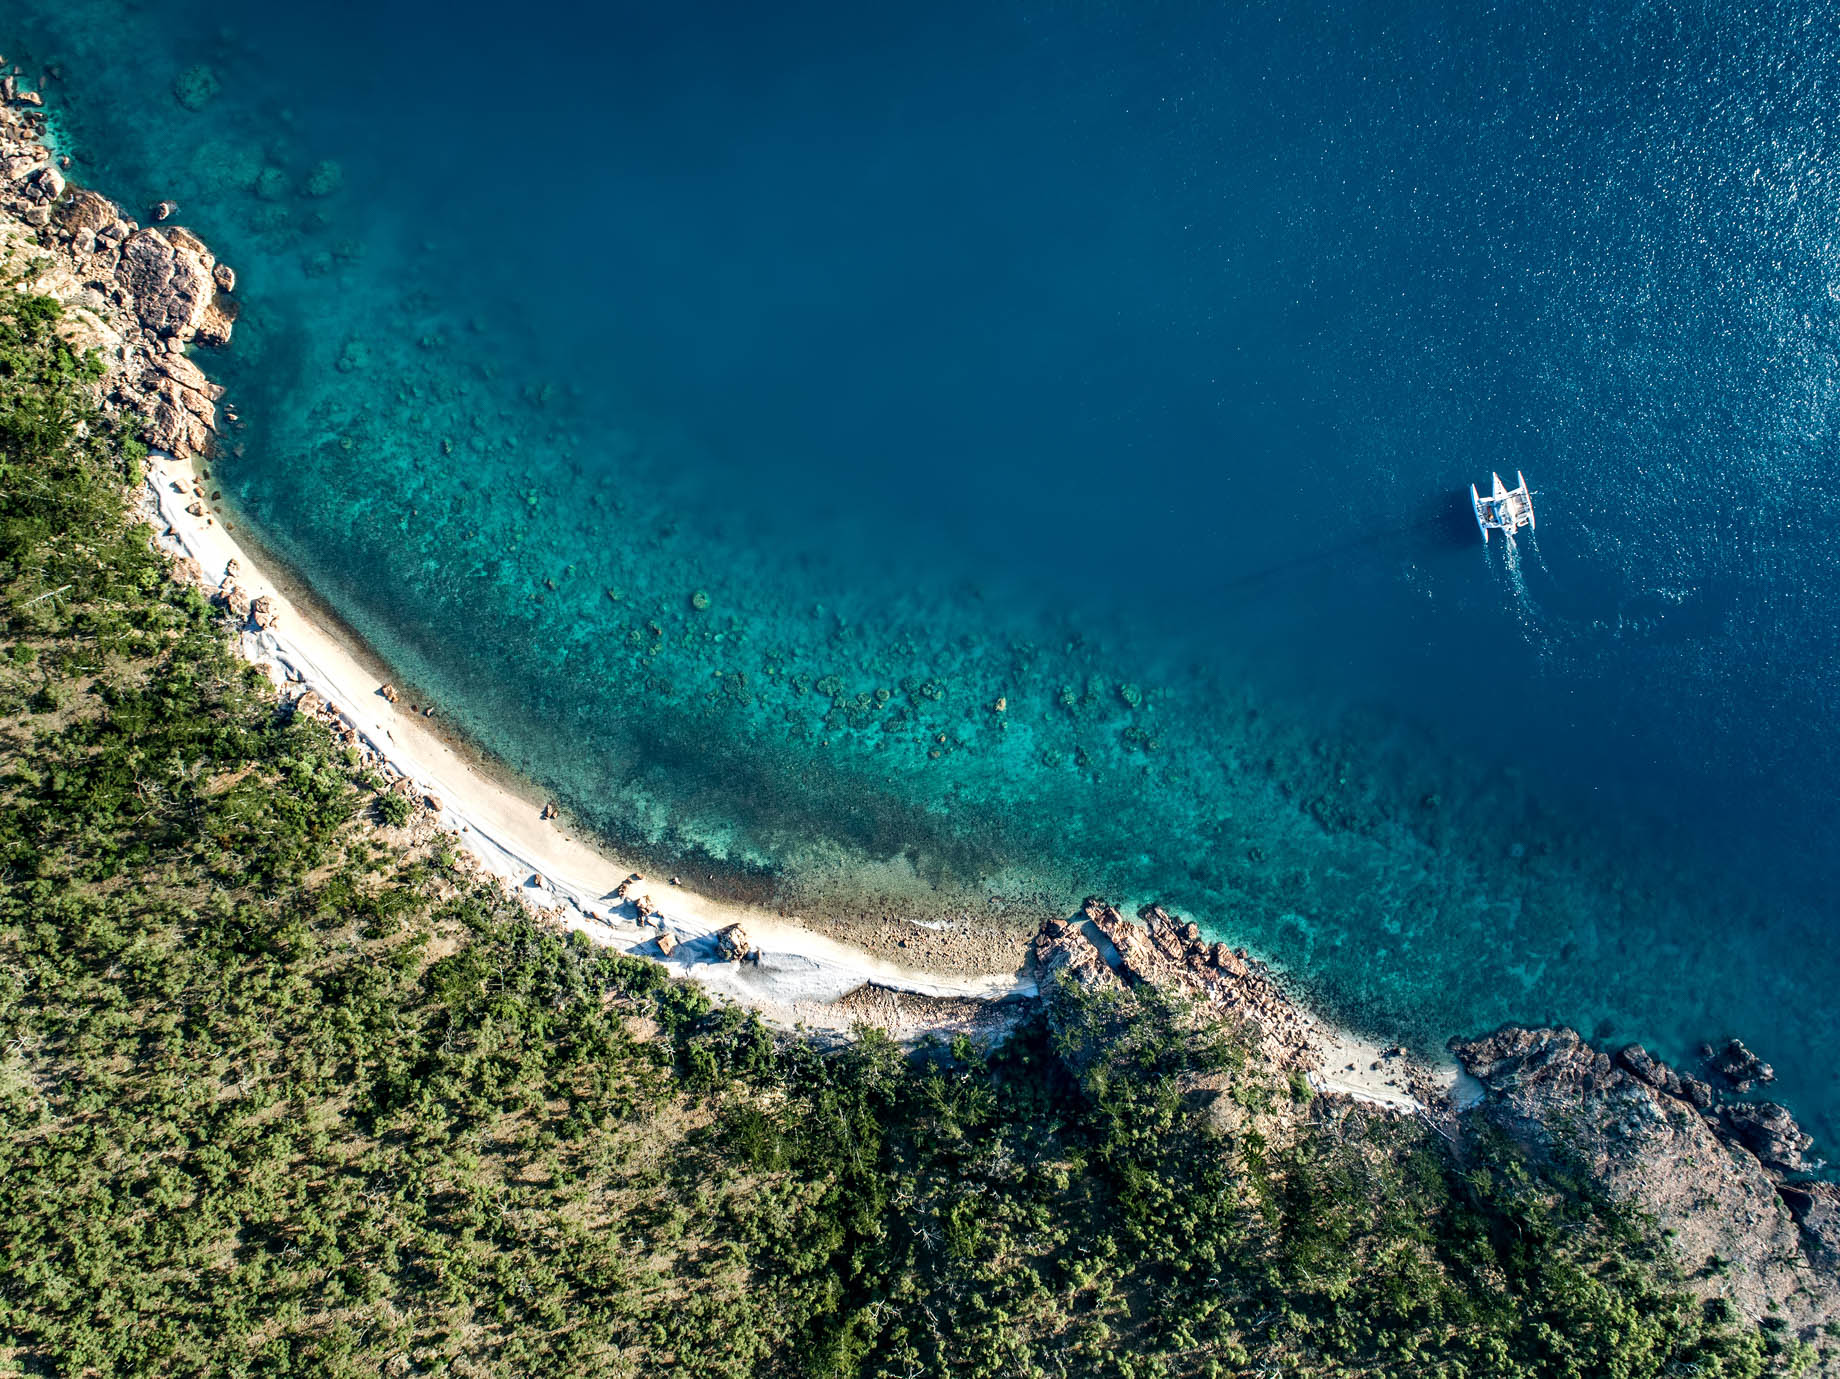 InterContinental Hayman Island Resort – Whitsunday Islands, Australia – Hayman Island Aerial Adventure